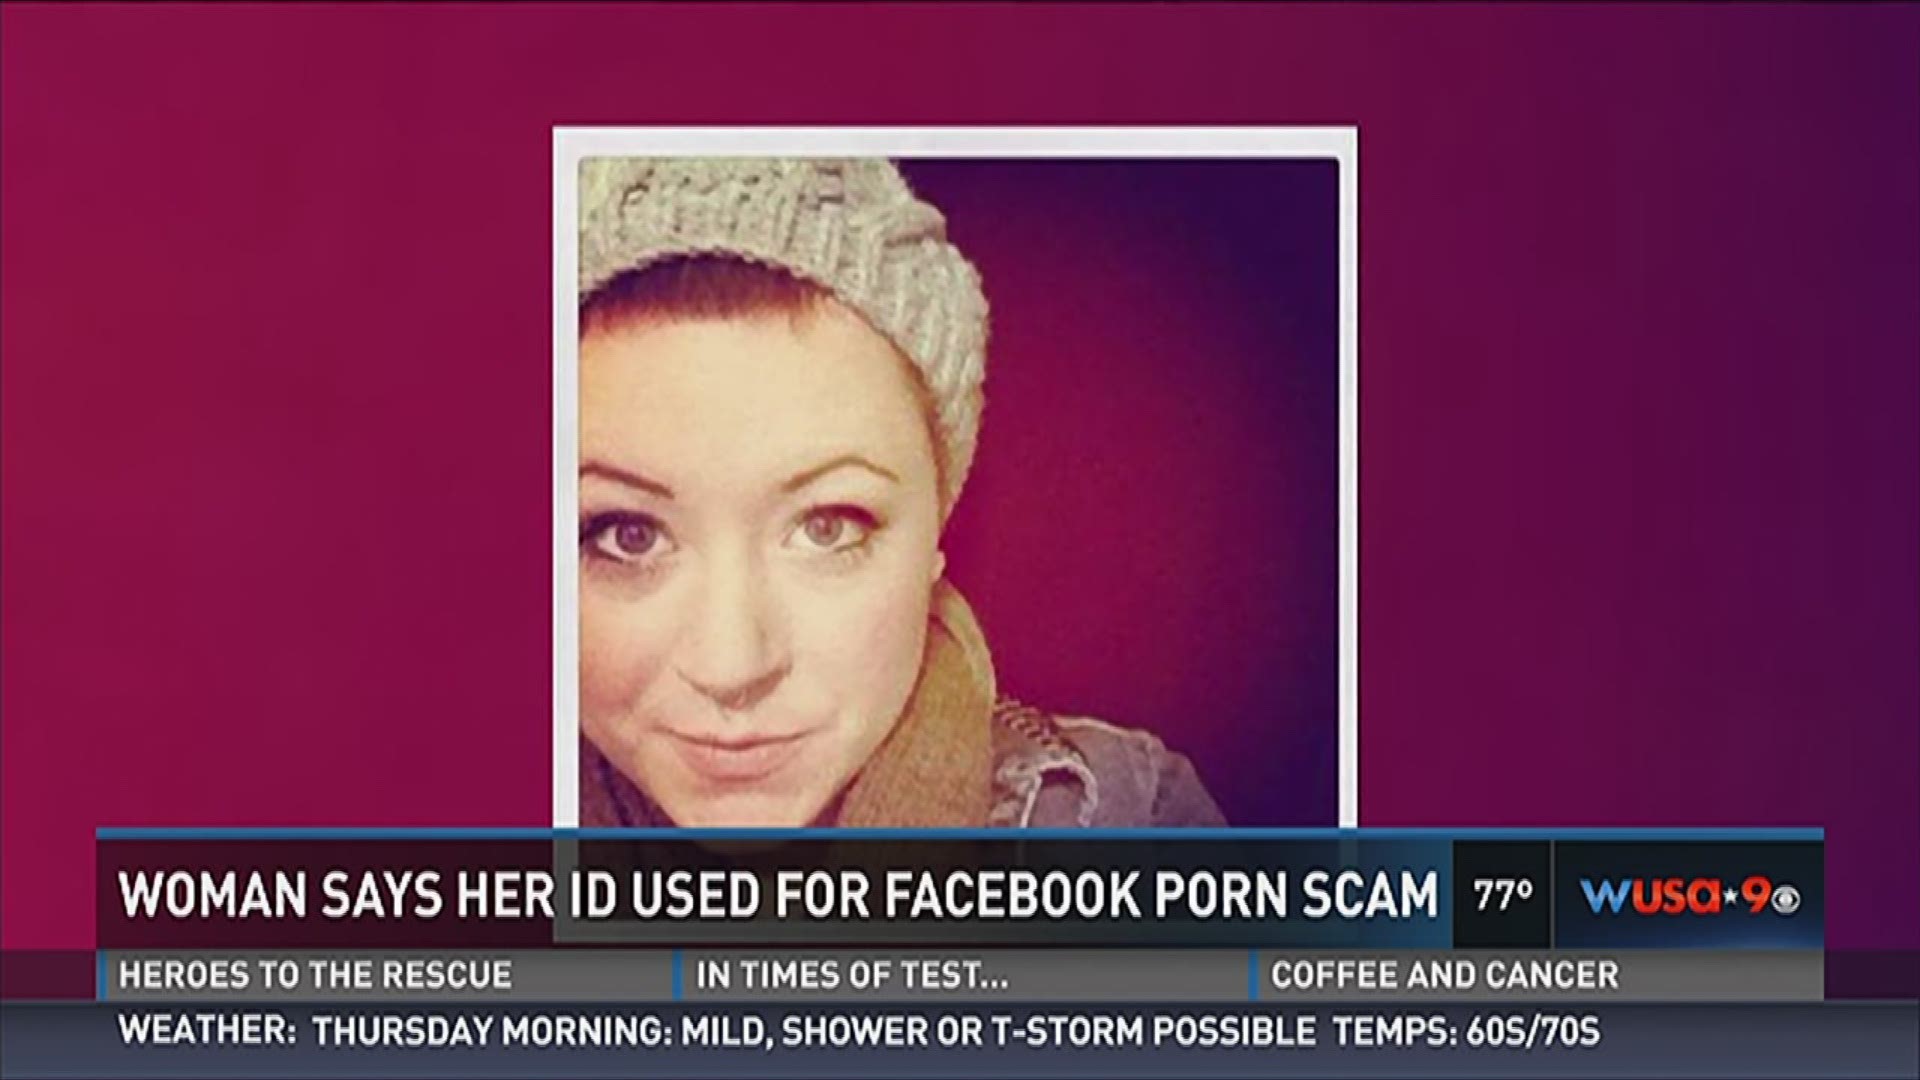 Facebook Sex Hd Video - Woman's Identity Stolen in Facebook Sex Scam | wltx.com